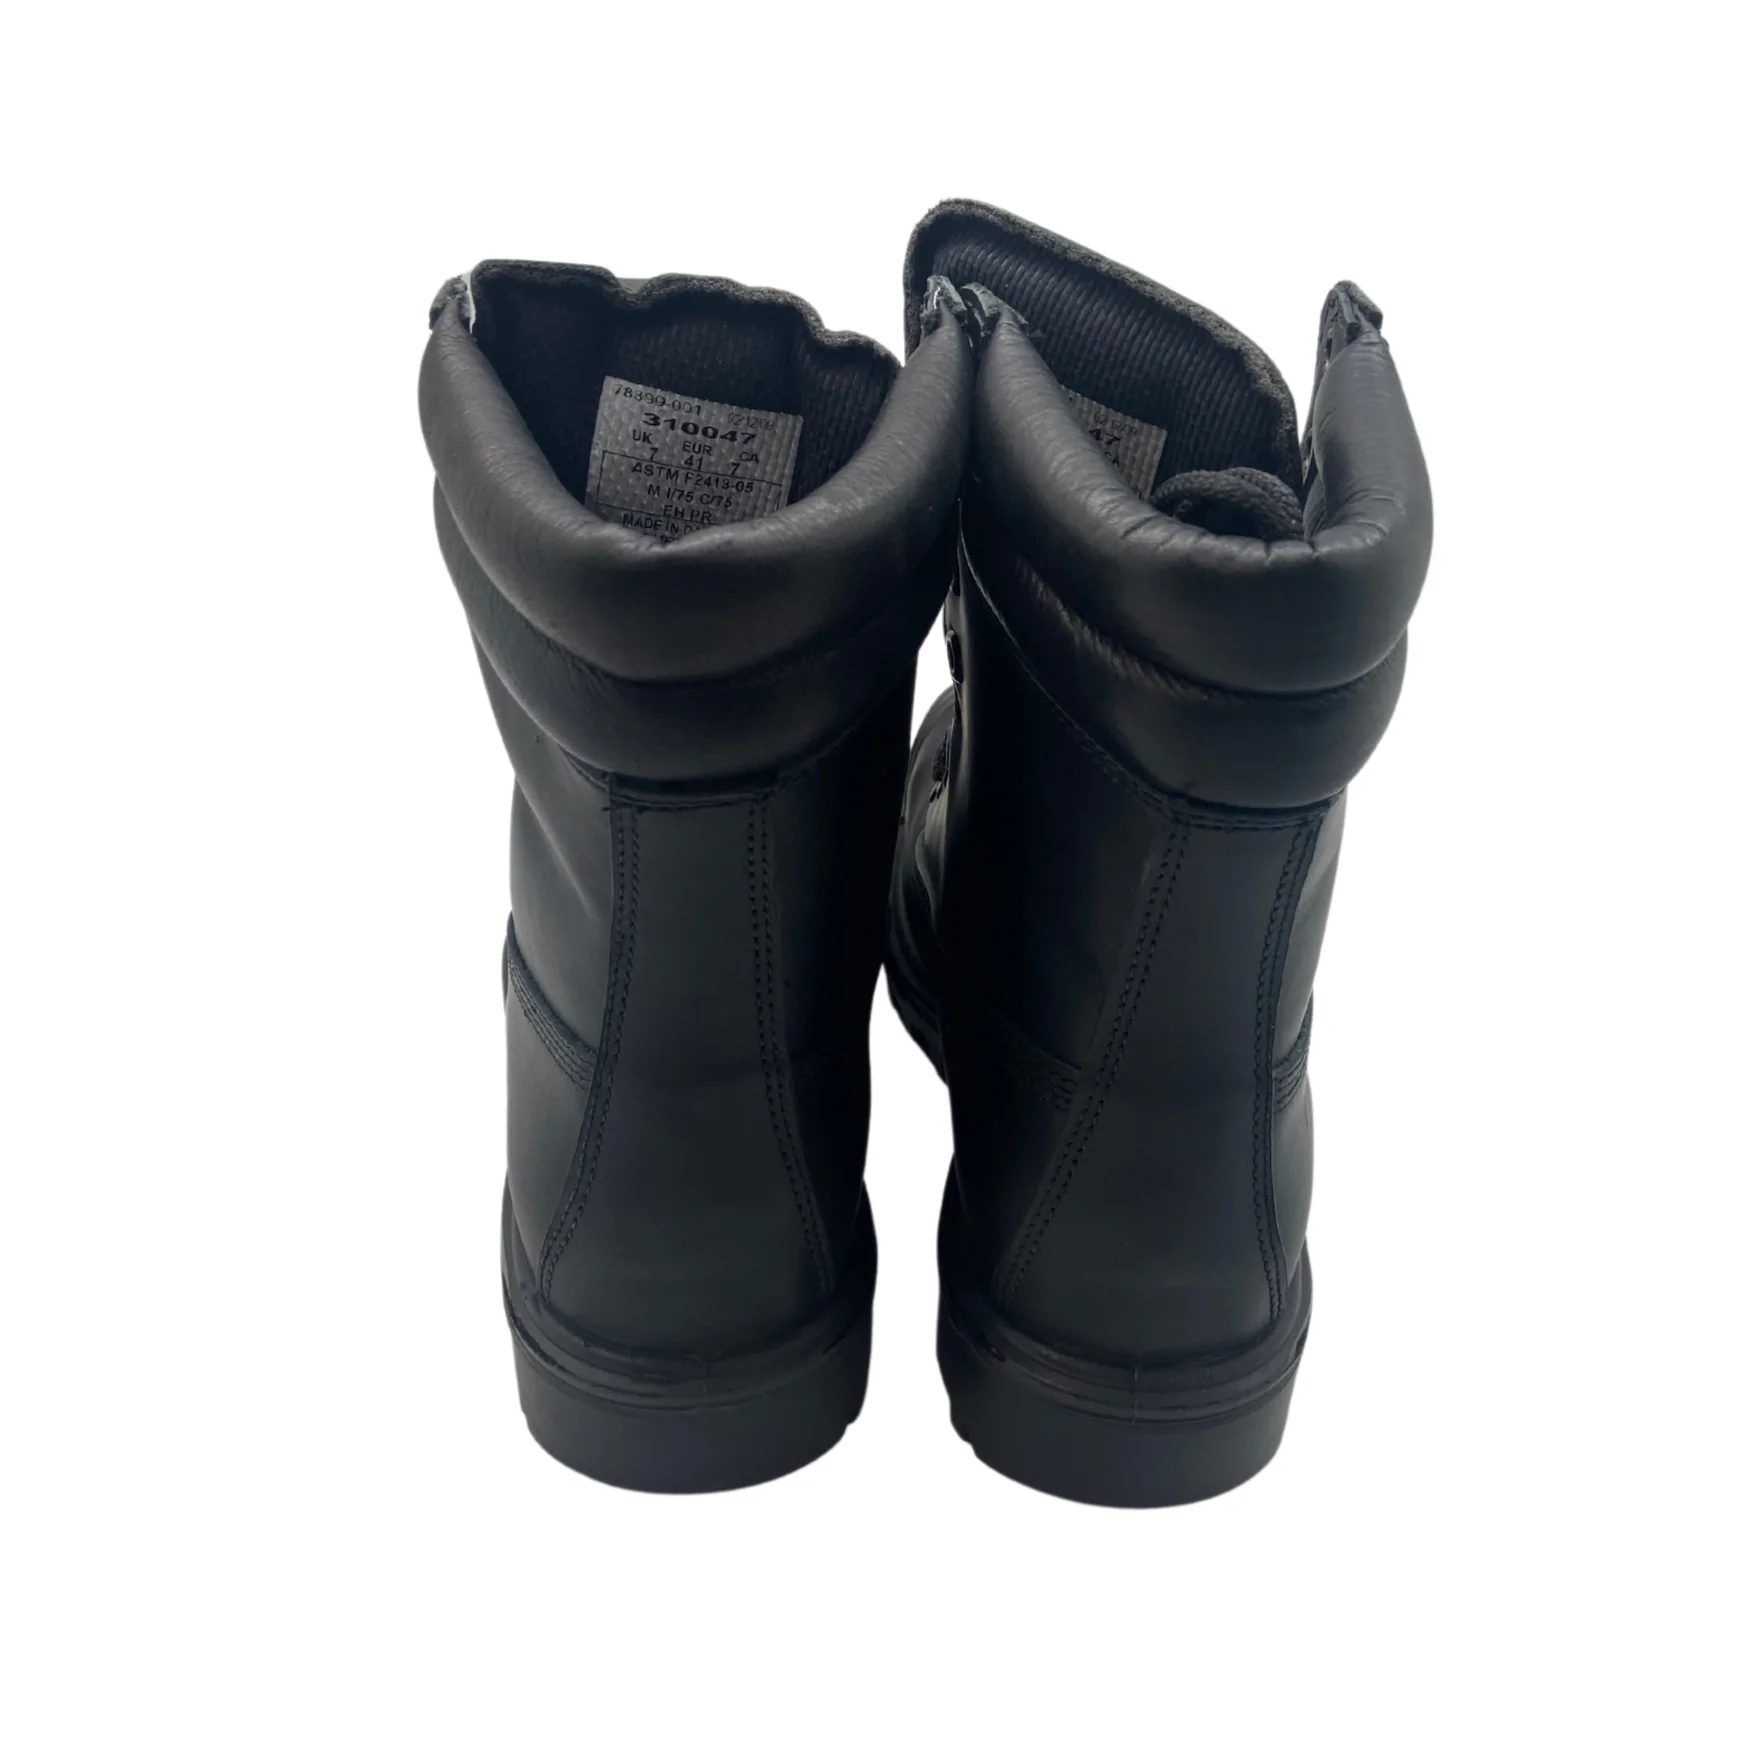 Kodiak: Men's Work Boots / LiteStorm / Tall / Black / Lace Up / Size 7